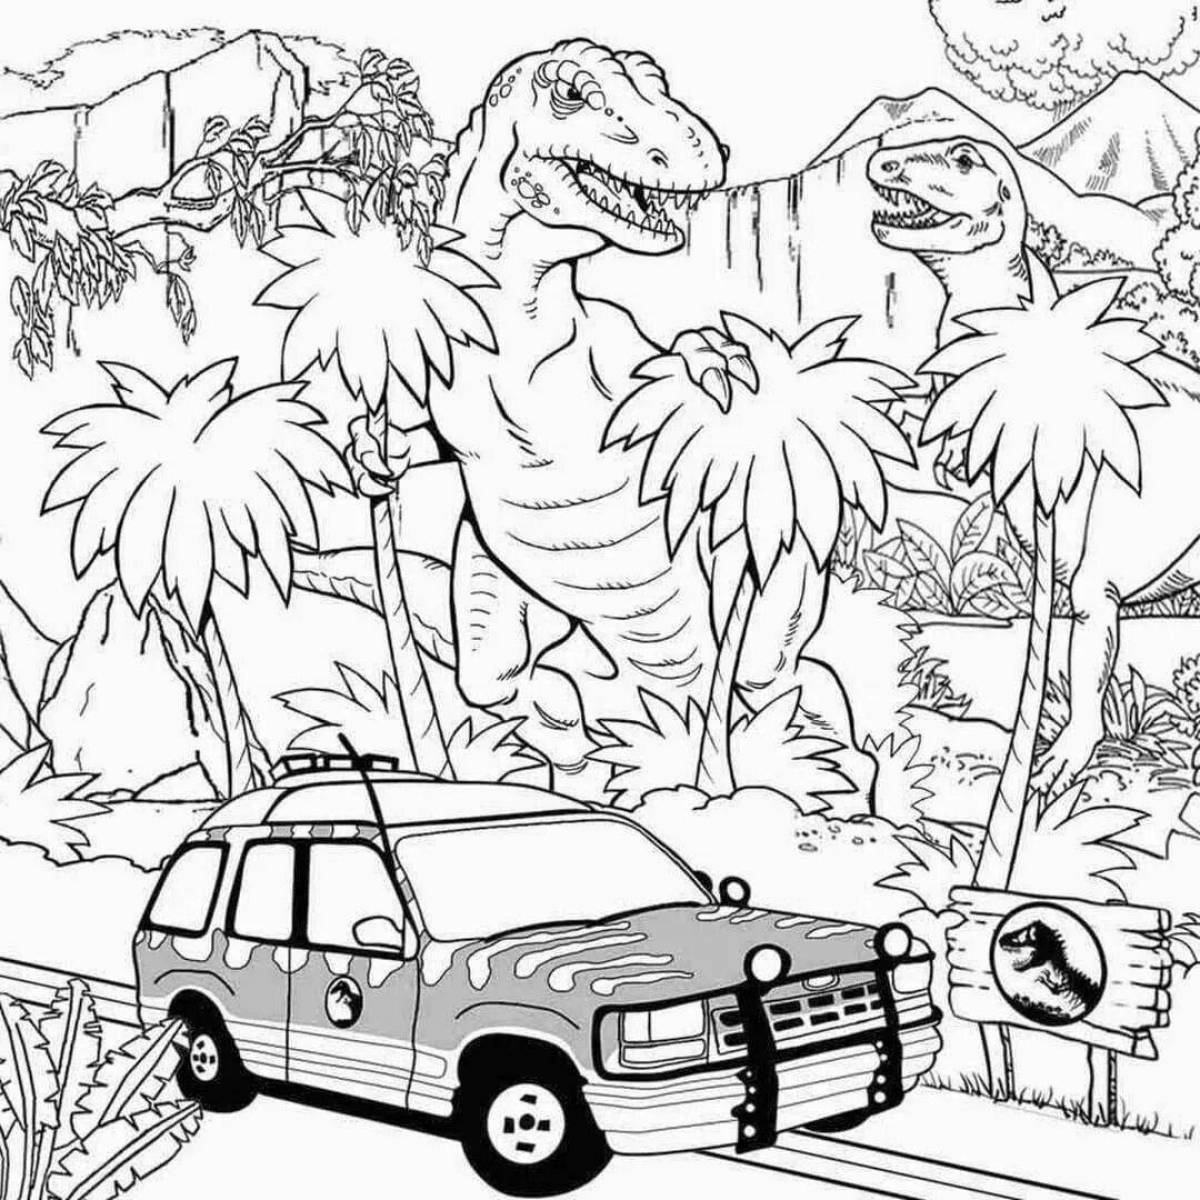 Jurassic fantasy world coloring book